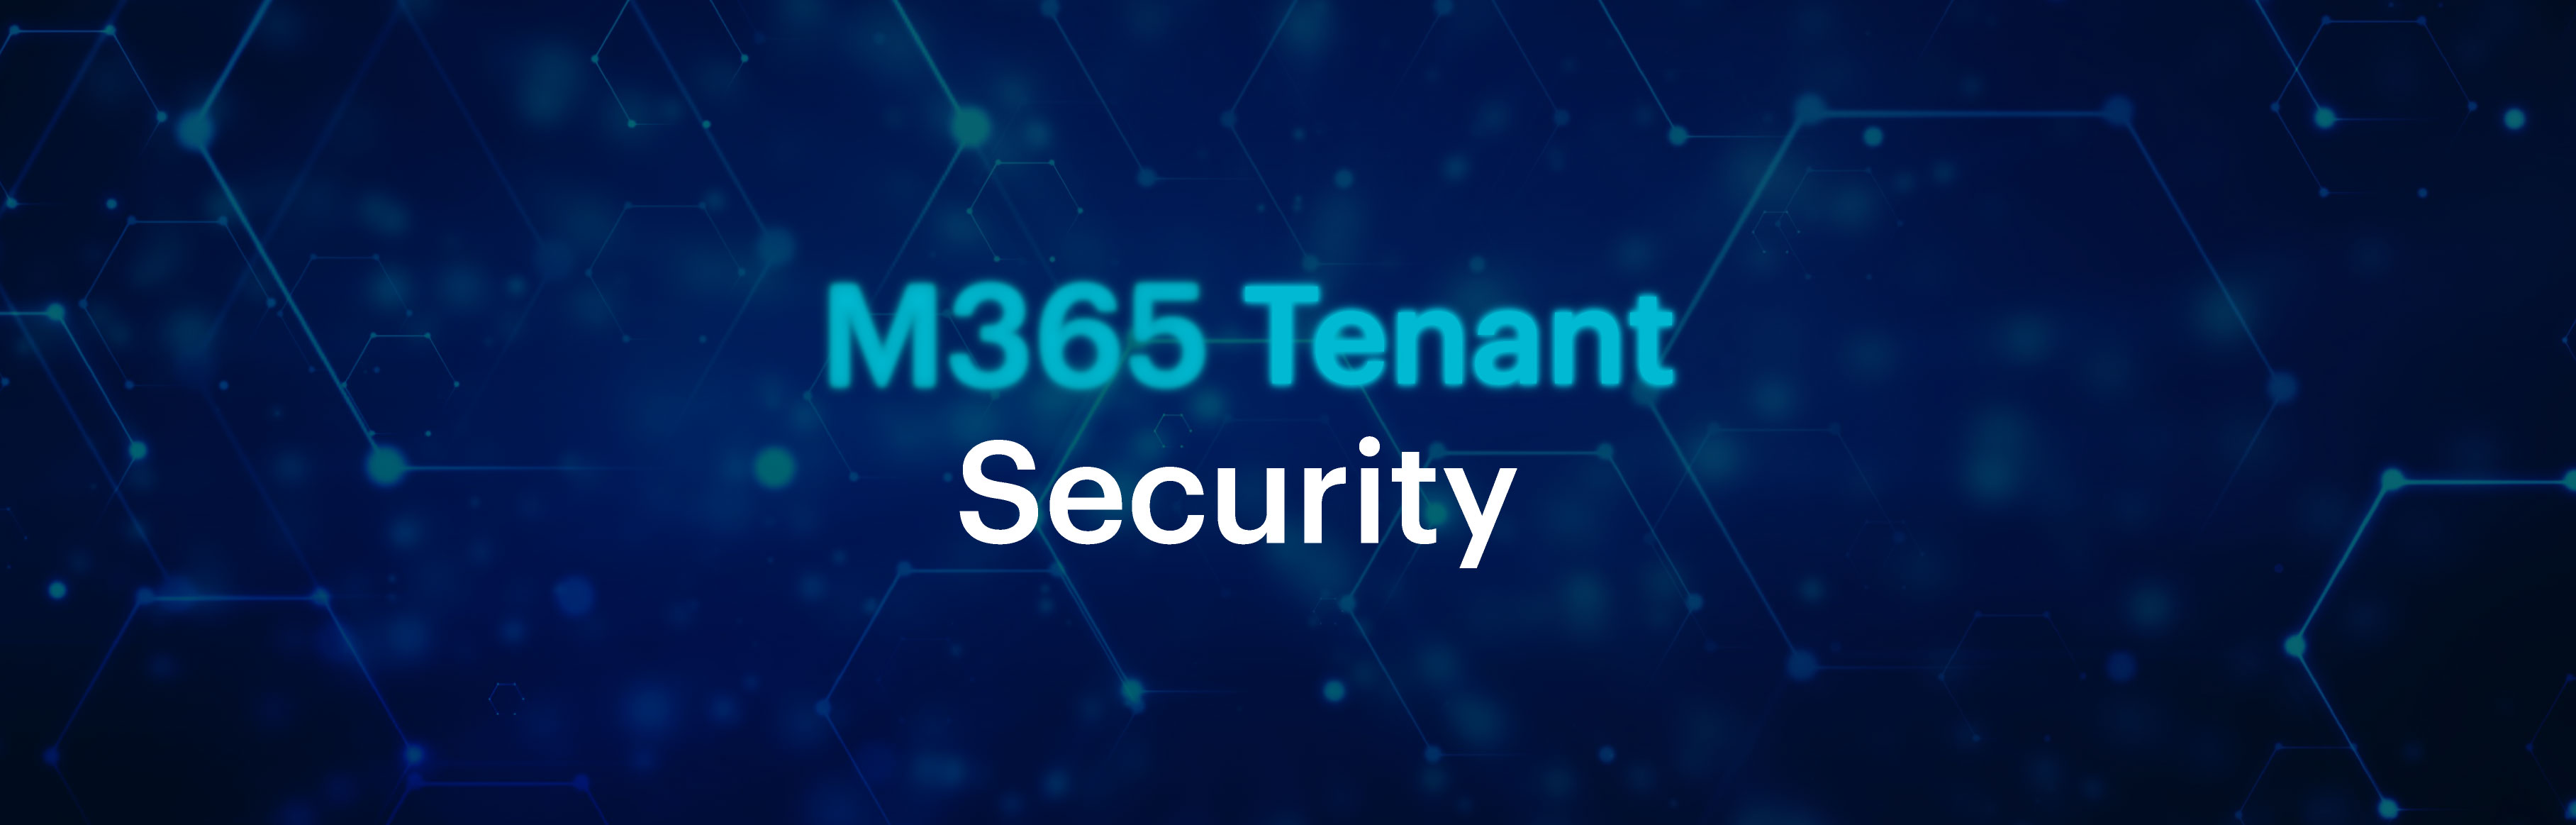 M365 Tenant Security